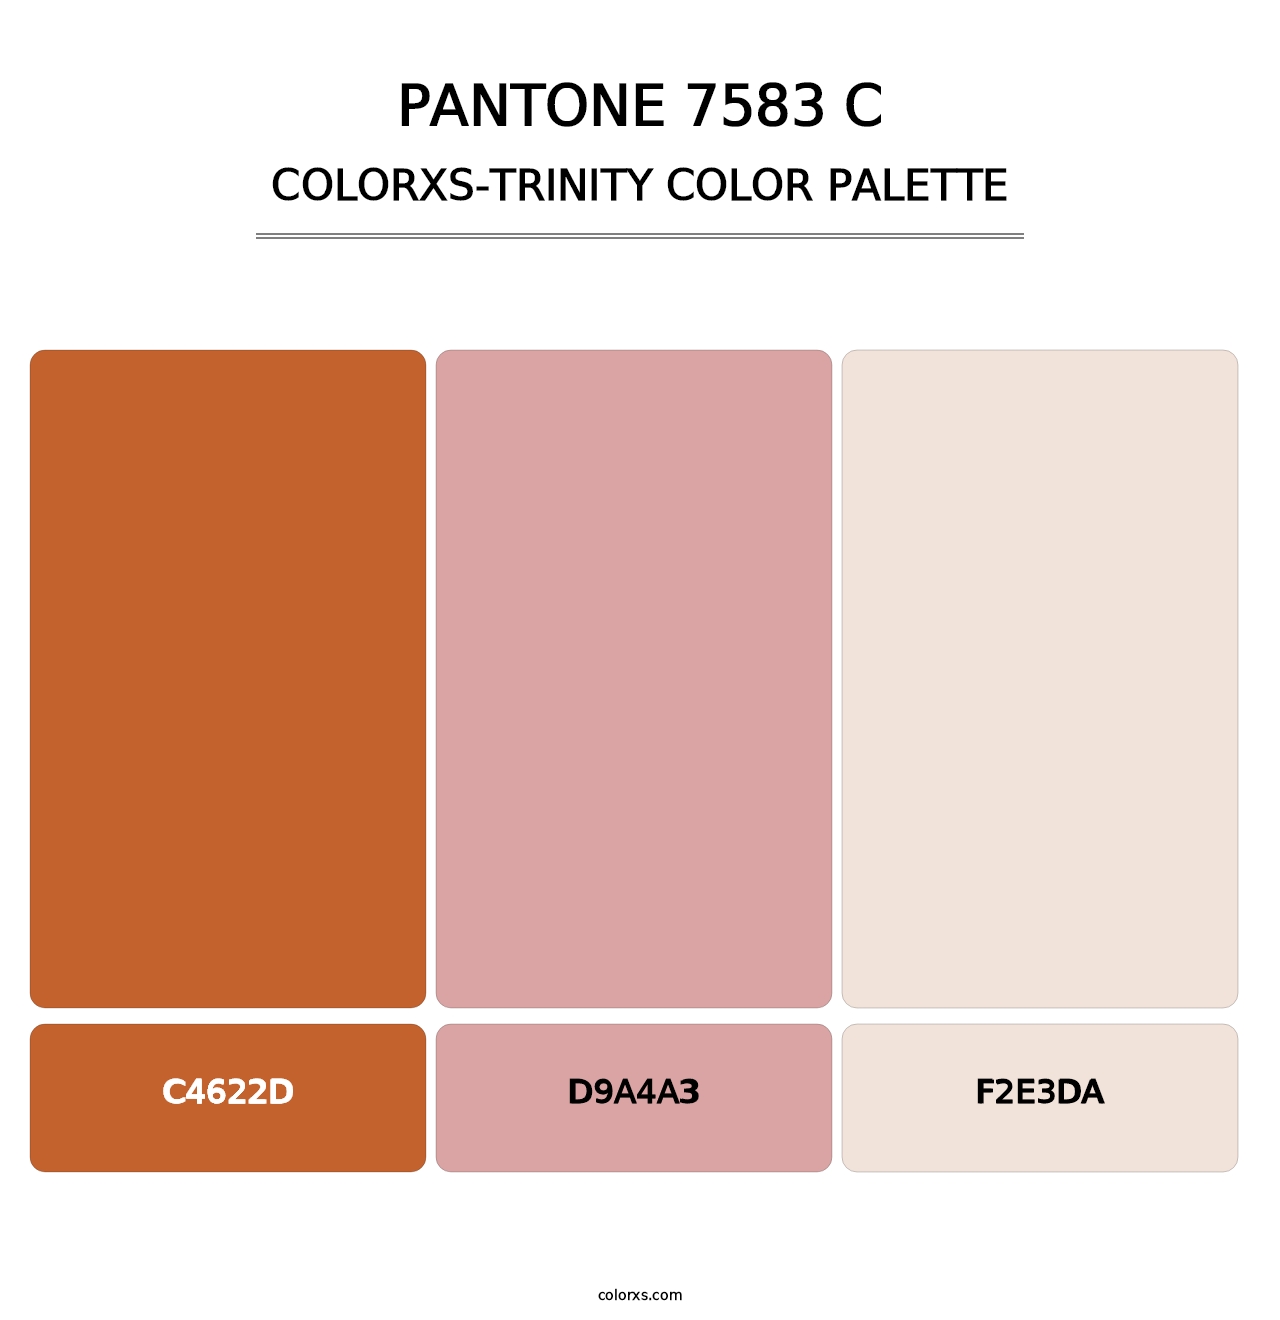 PANTONE 7583 C - Colorxs Trinity Palette